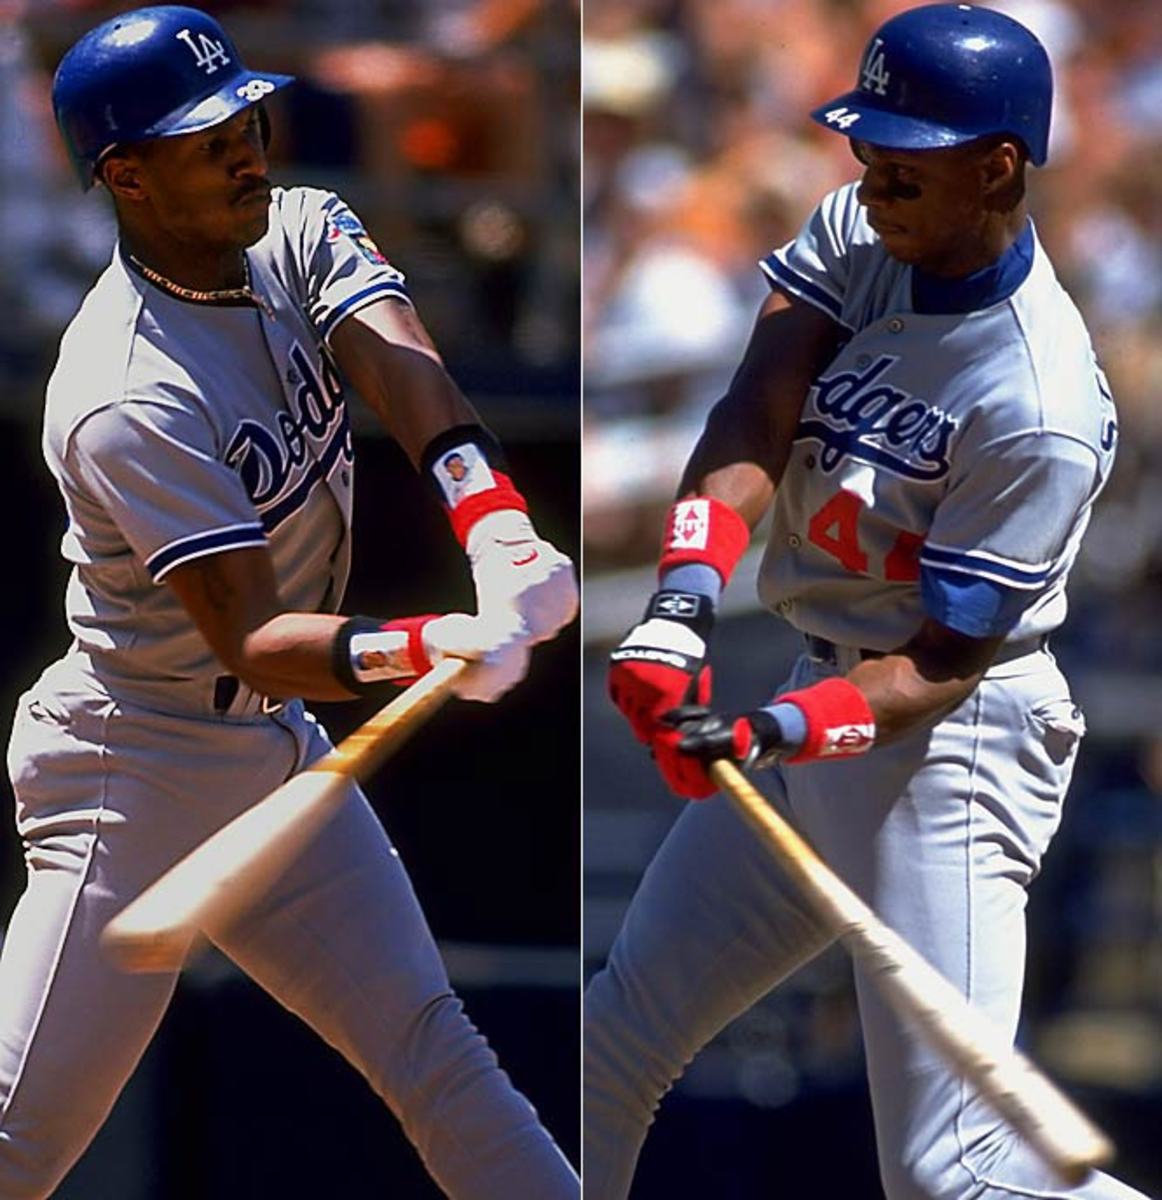 1992 Los Angeles Dodgers